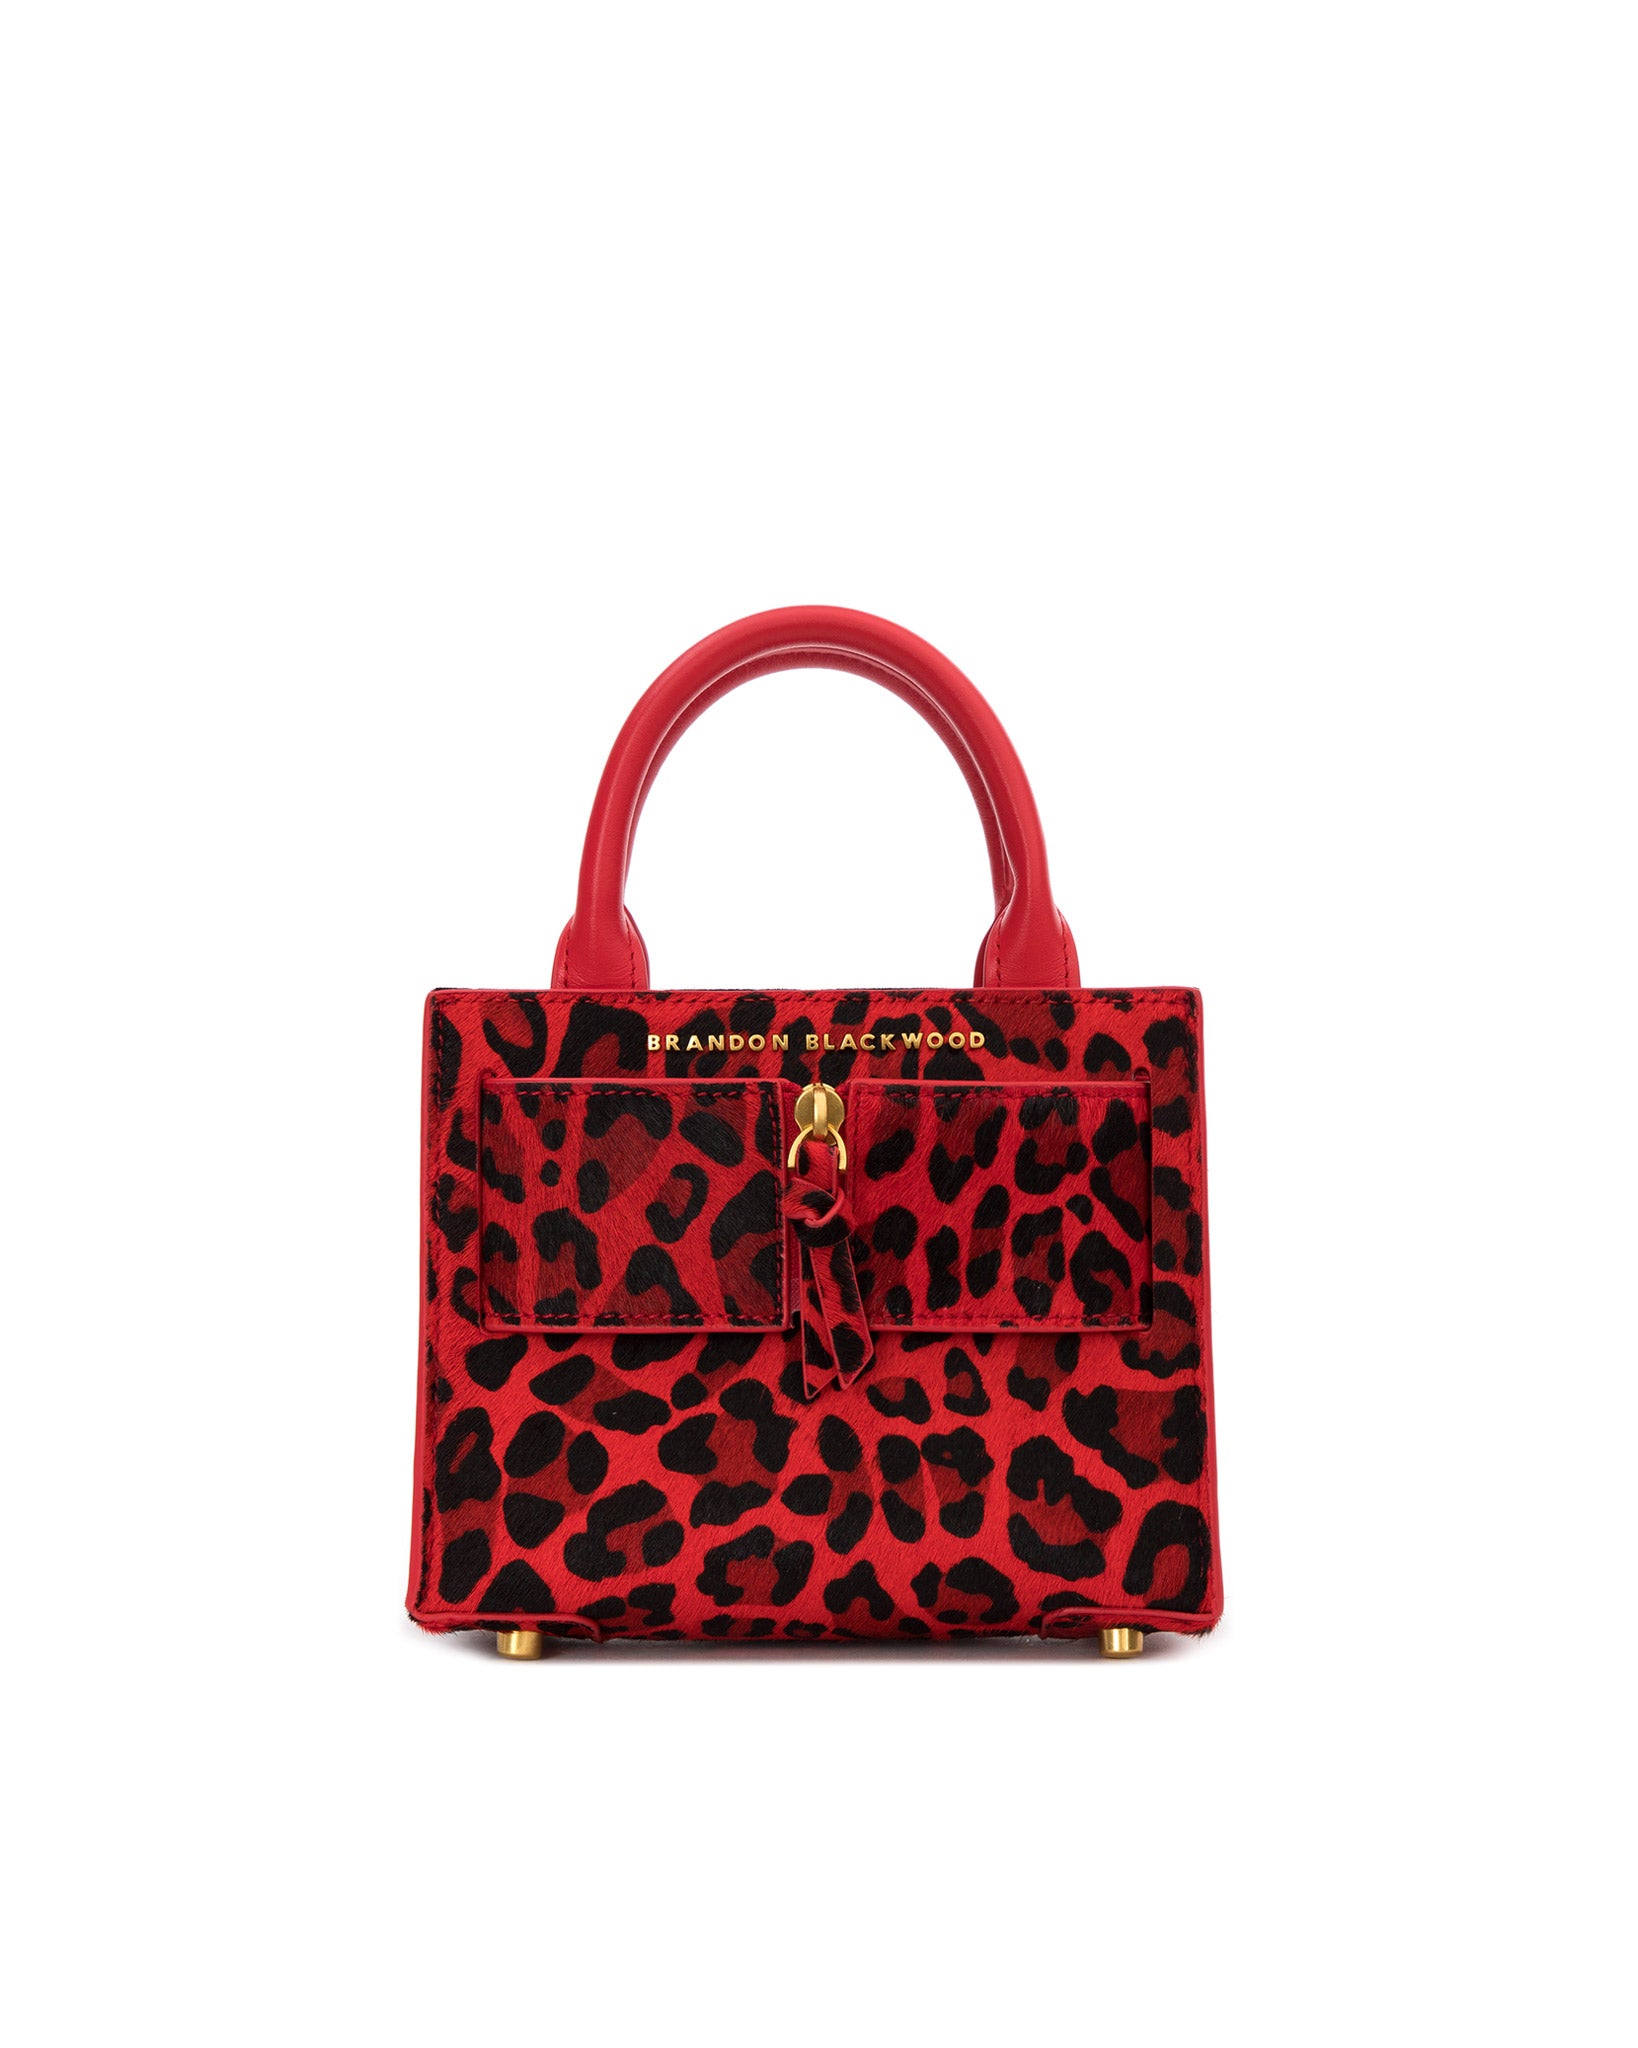 louis vuitton leopard print handbag